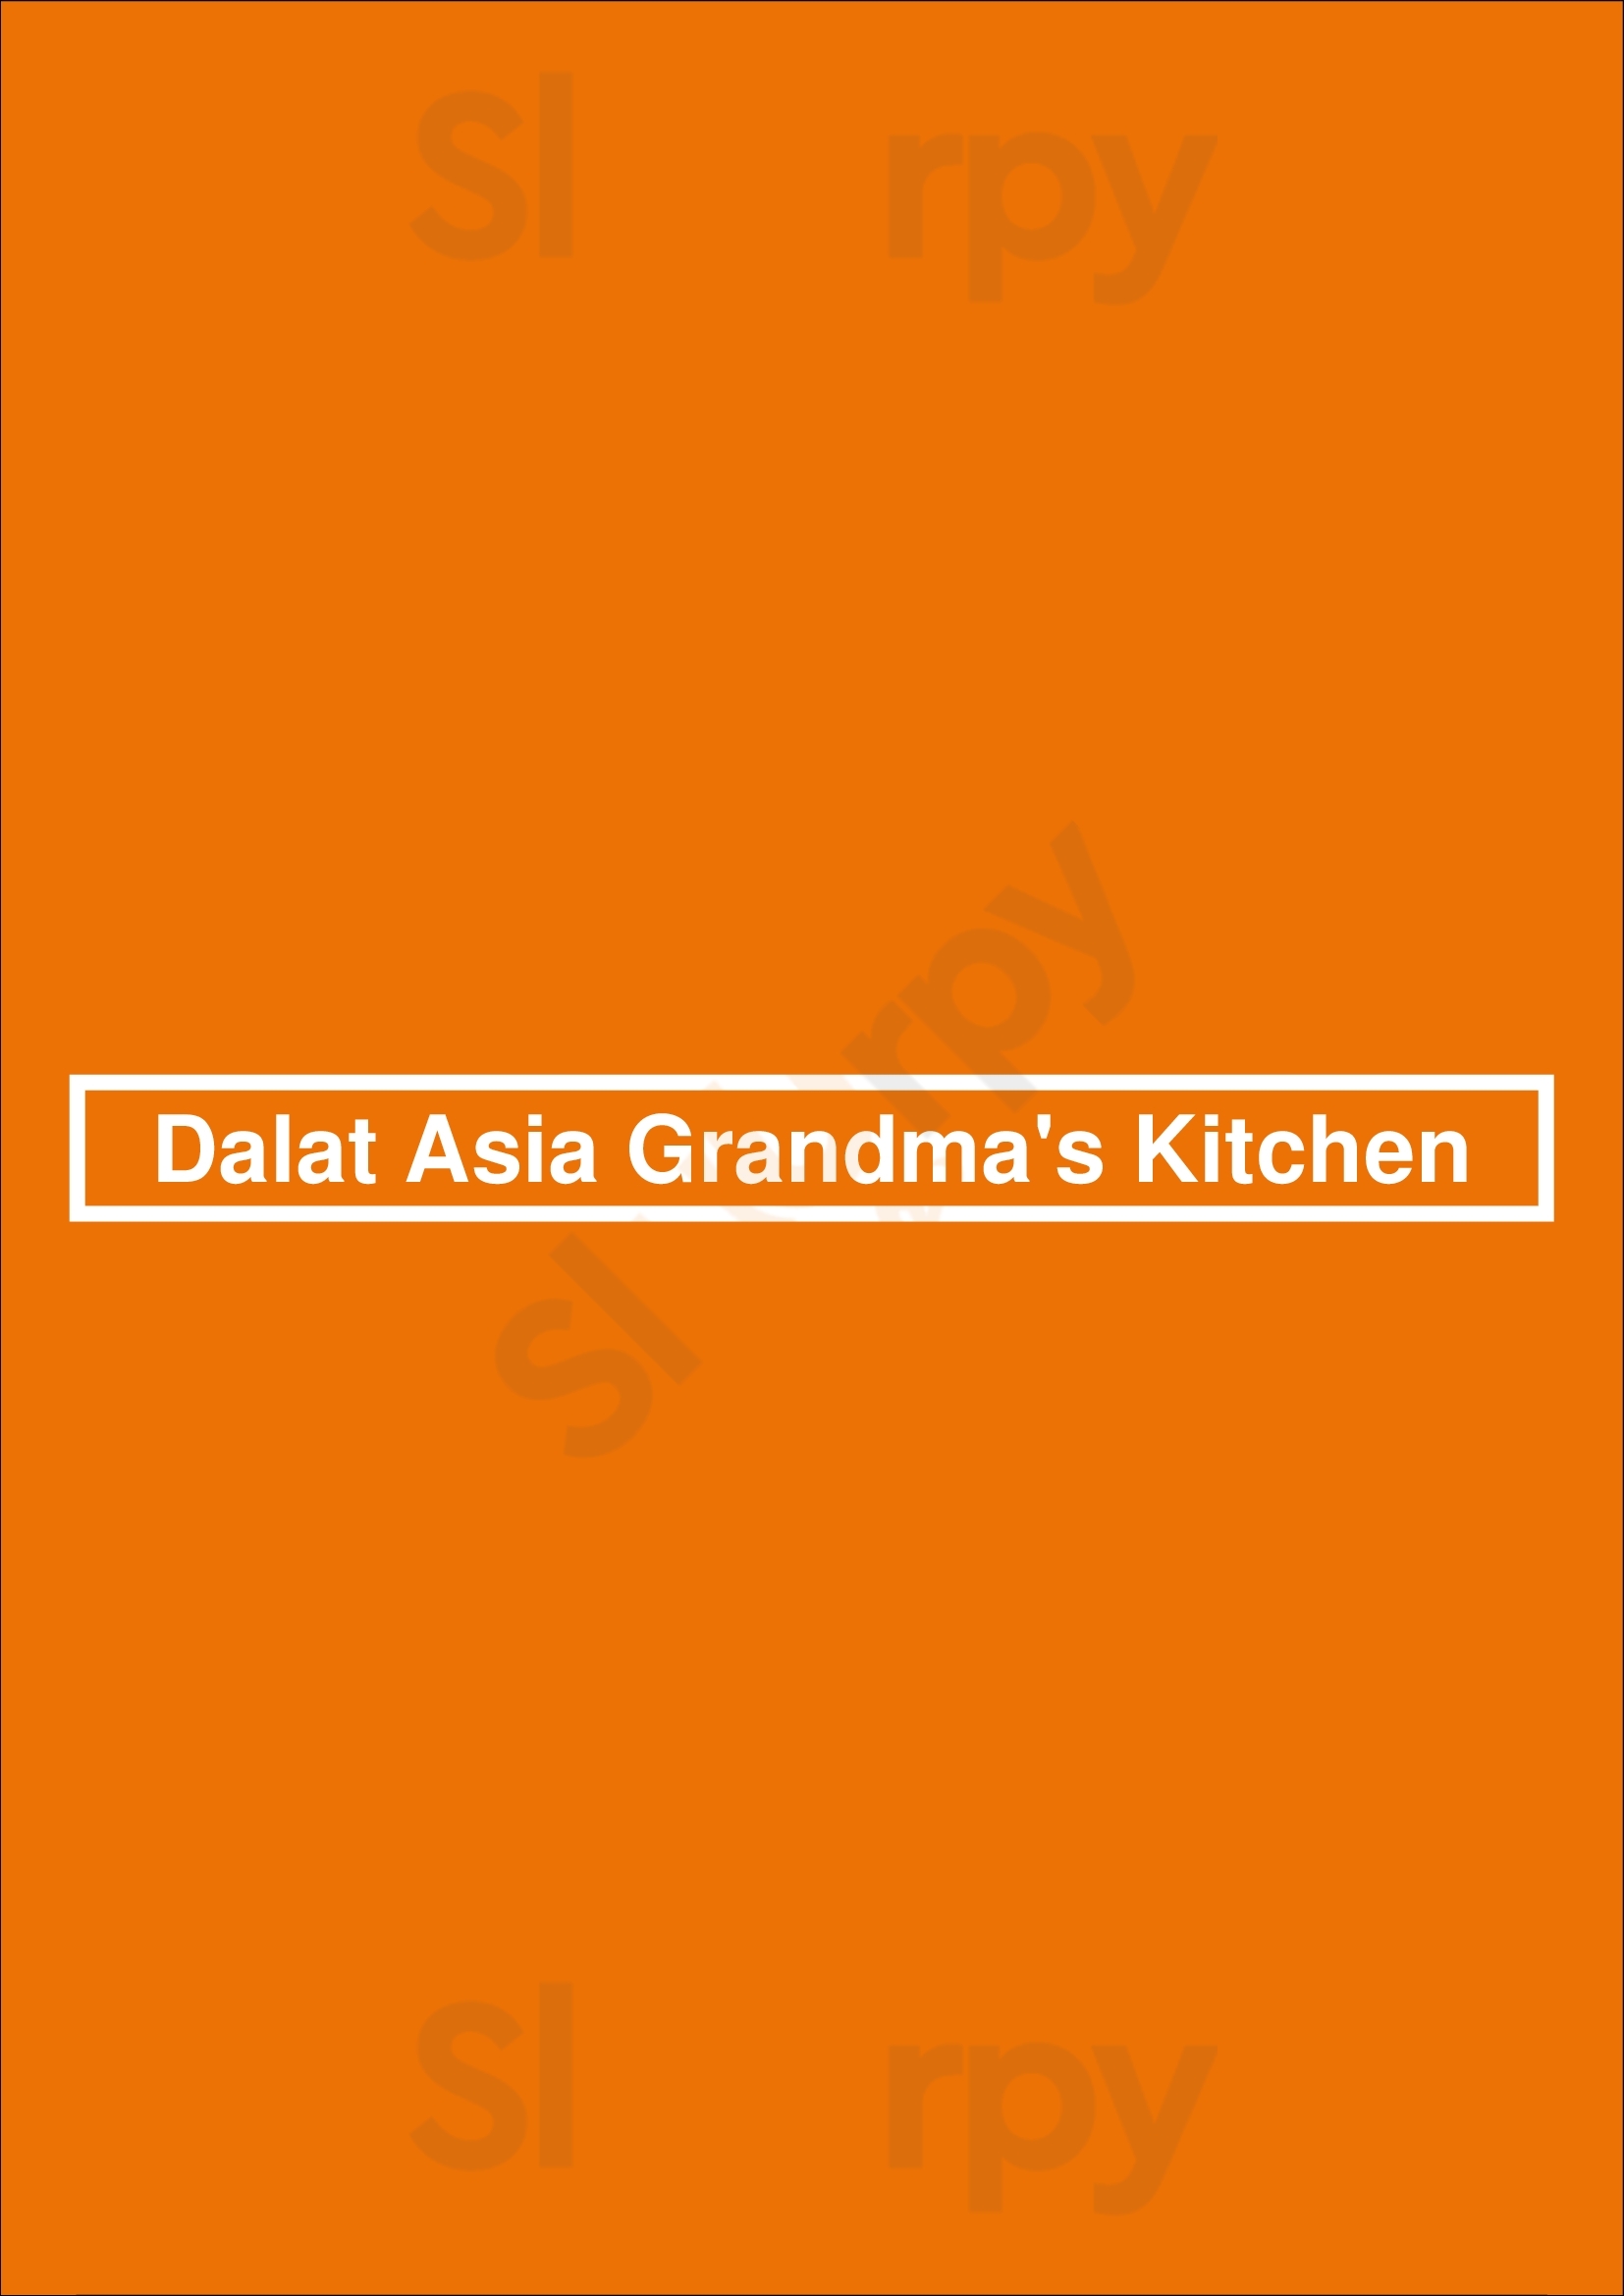 Dalat Asia Grandma's Kitchen Raleigh Menu - 1